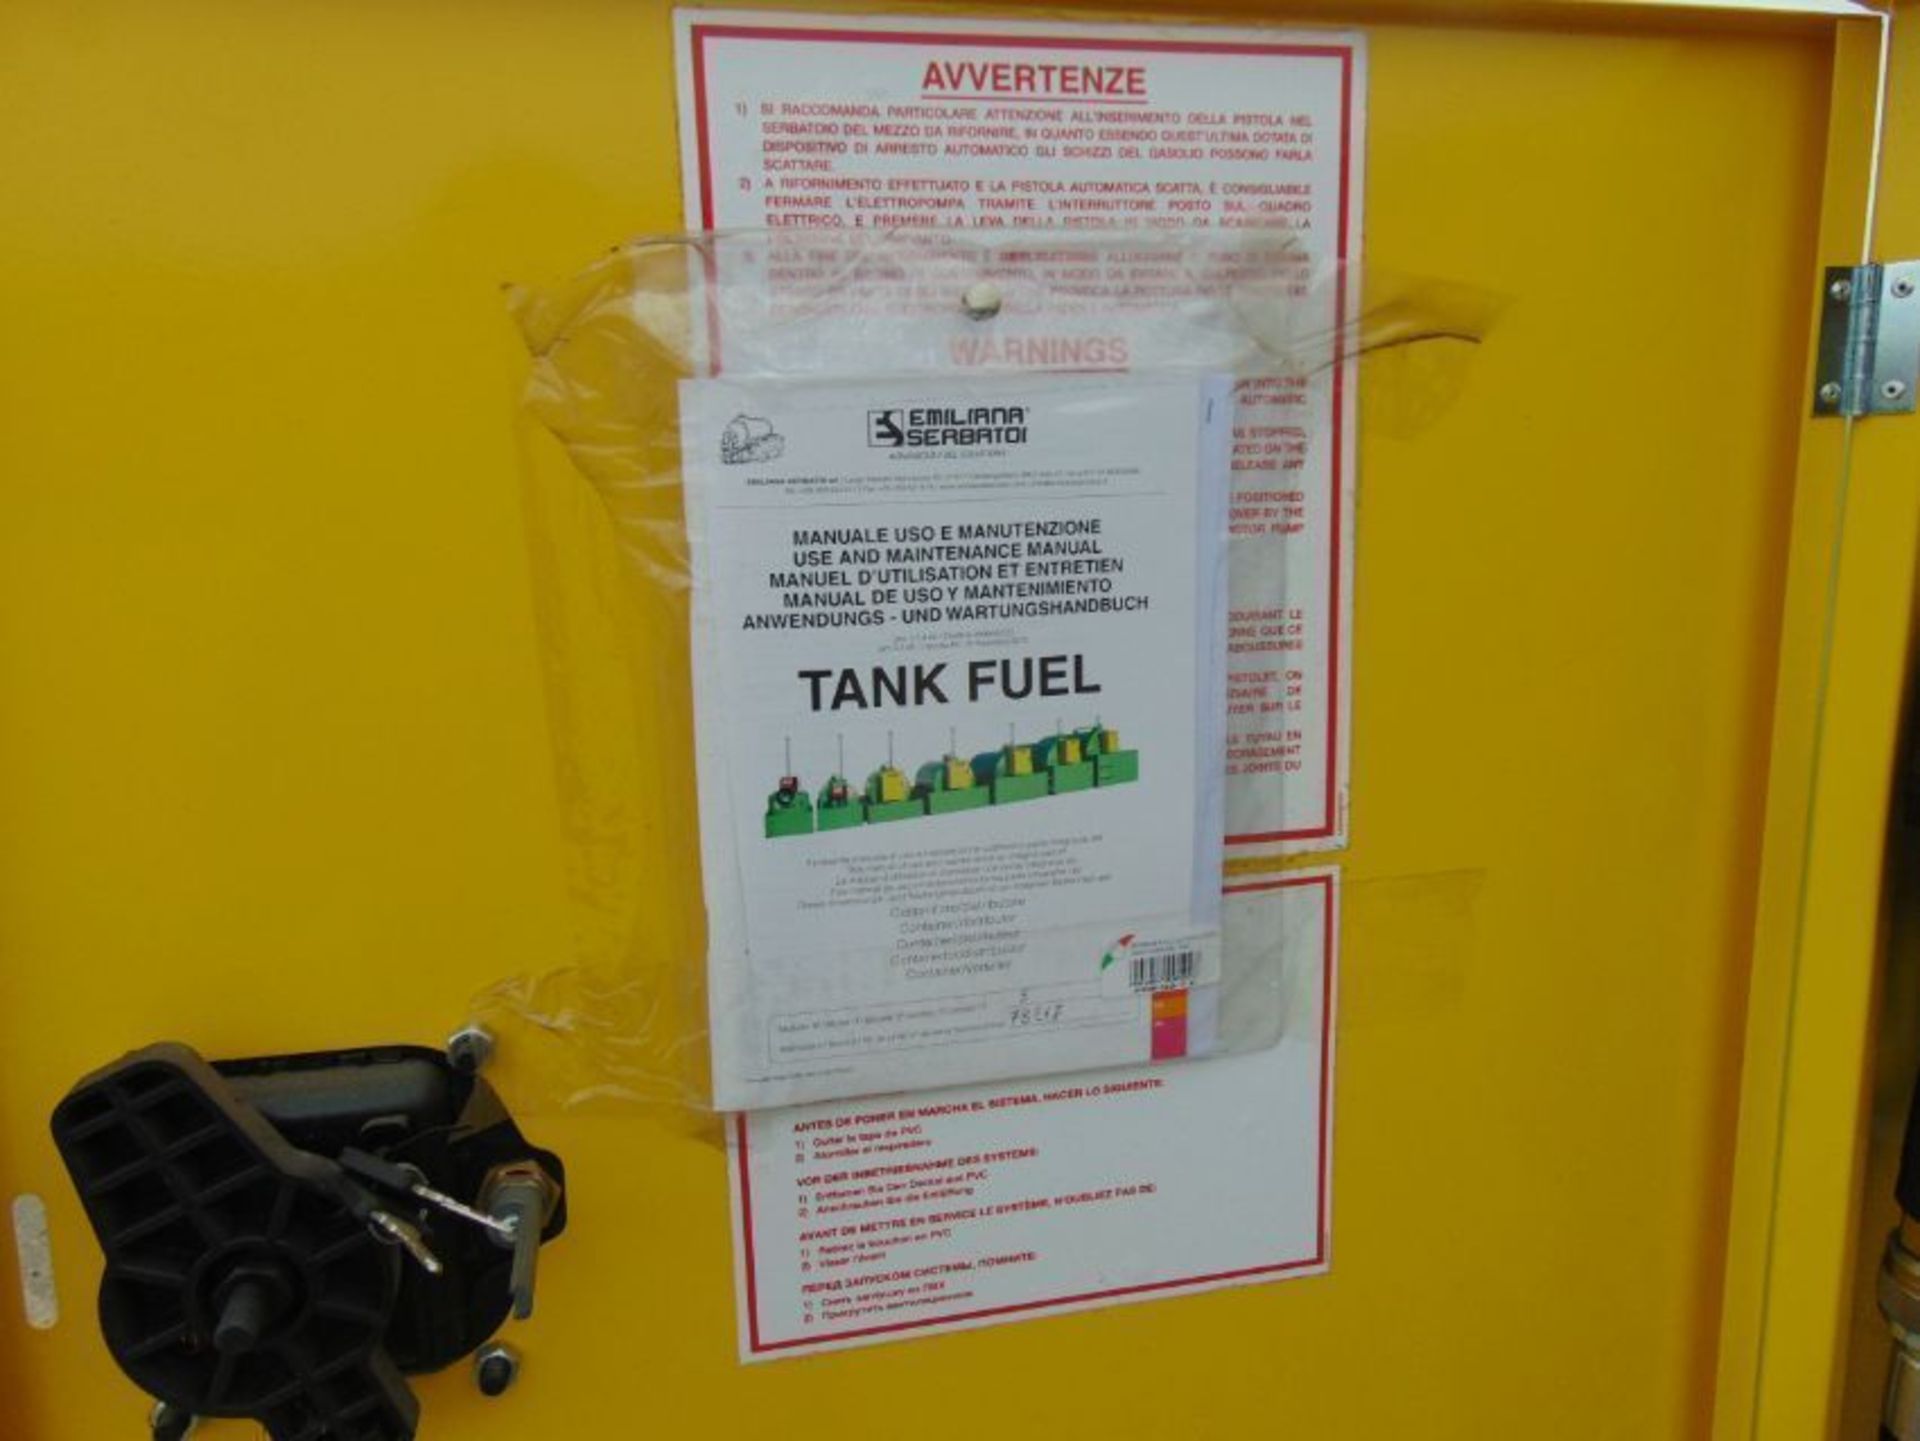 NEW UNUSED Emiliana Serbatoi 2023 TF3/50 3172 litre Diesel Fuel Tank - Image 10 of 11